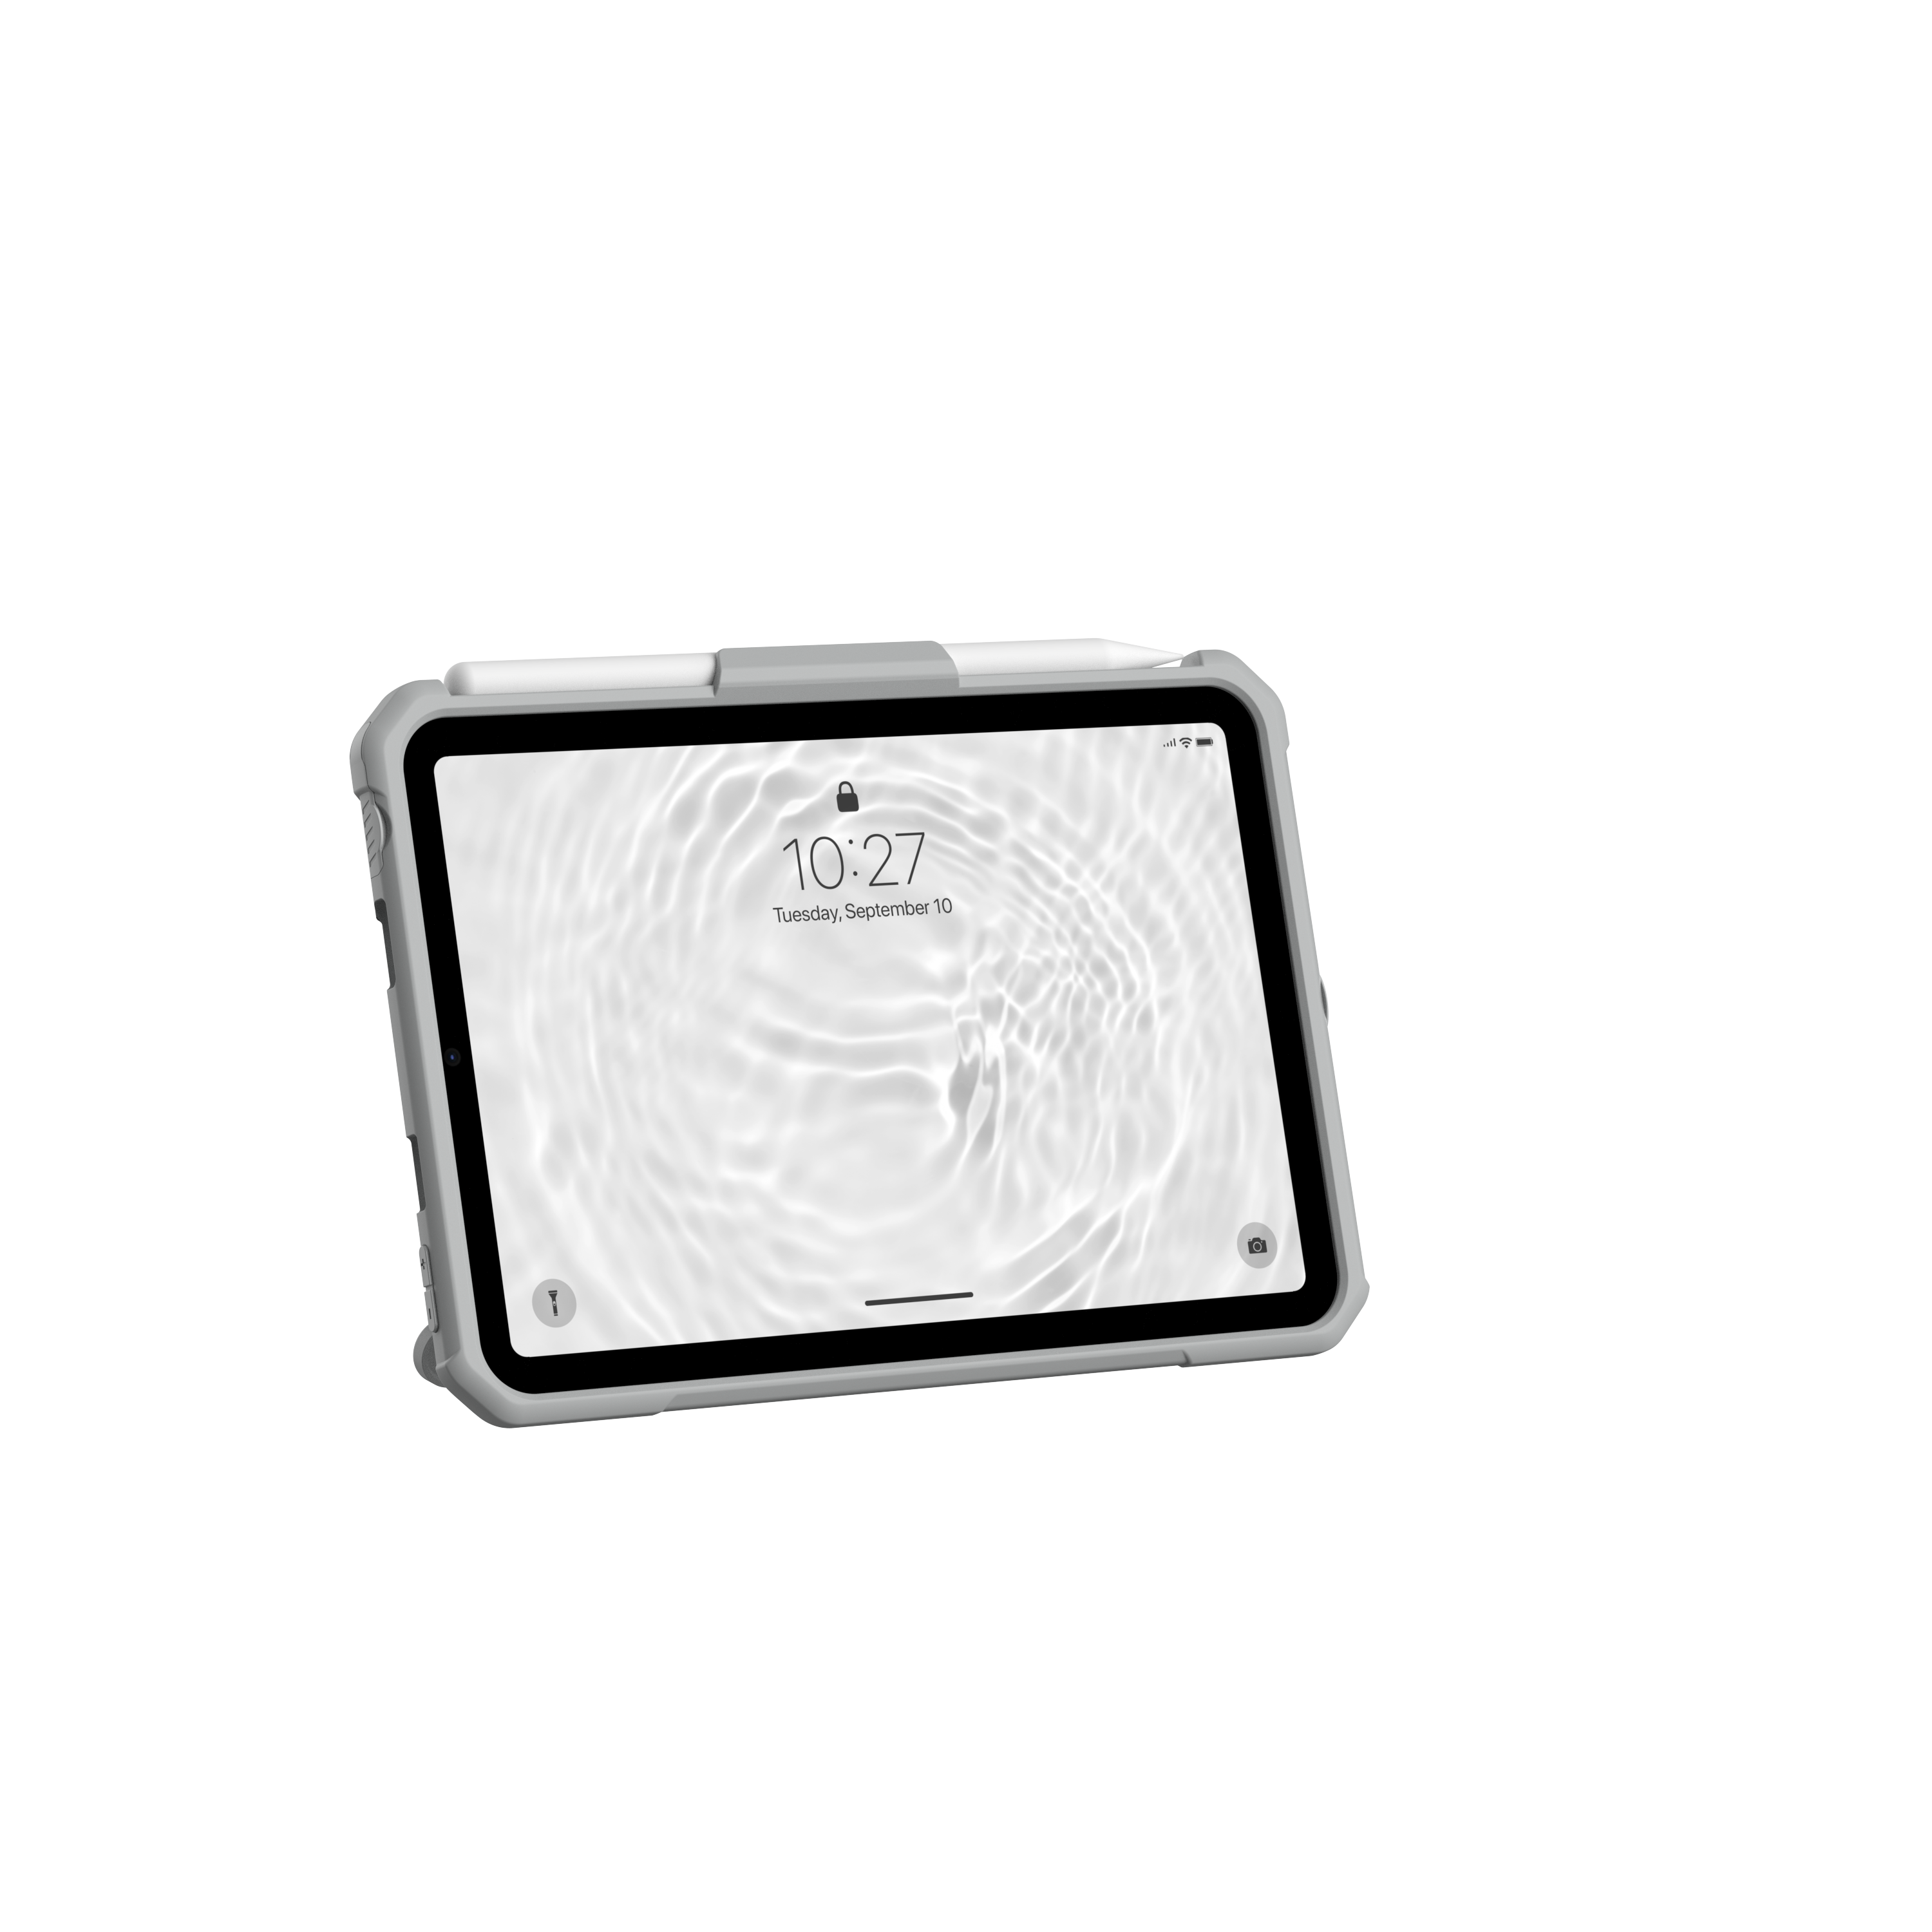 Ipad Mini/mini 2 Case Slim [ultra Fit] Crunchyroll Yama No Susume  Protective Case Cover : : Computers & Accessories